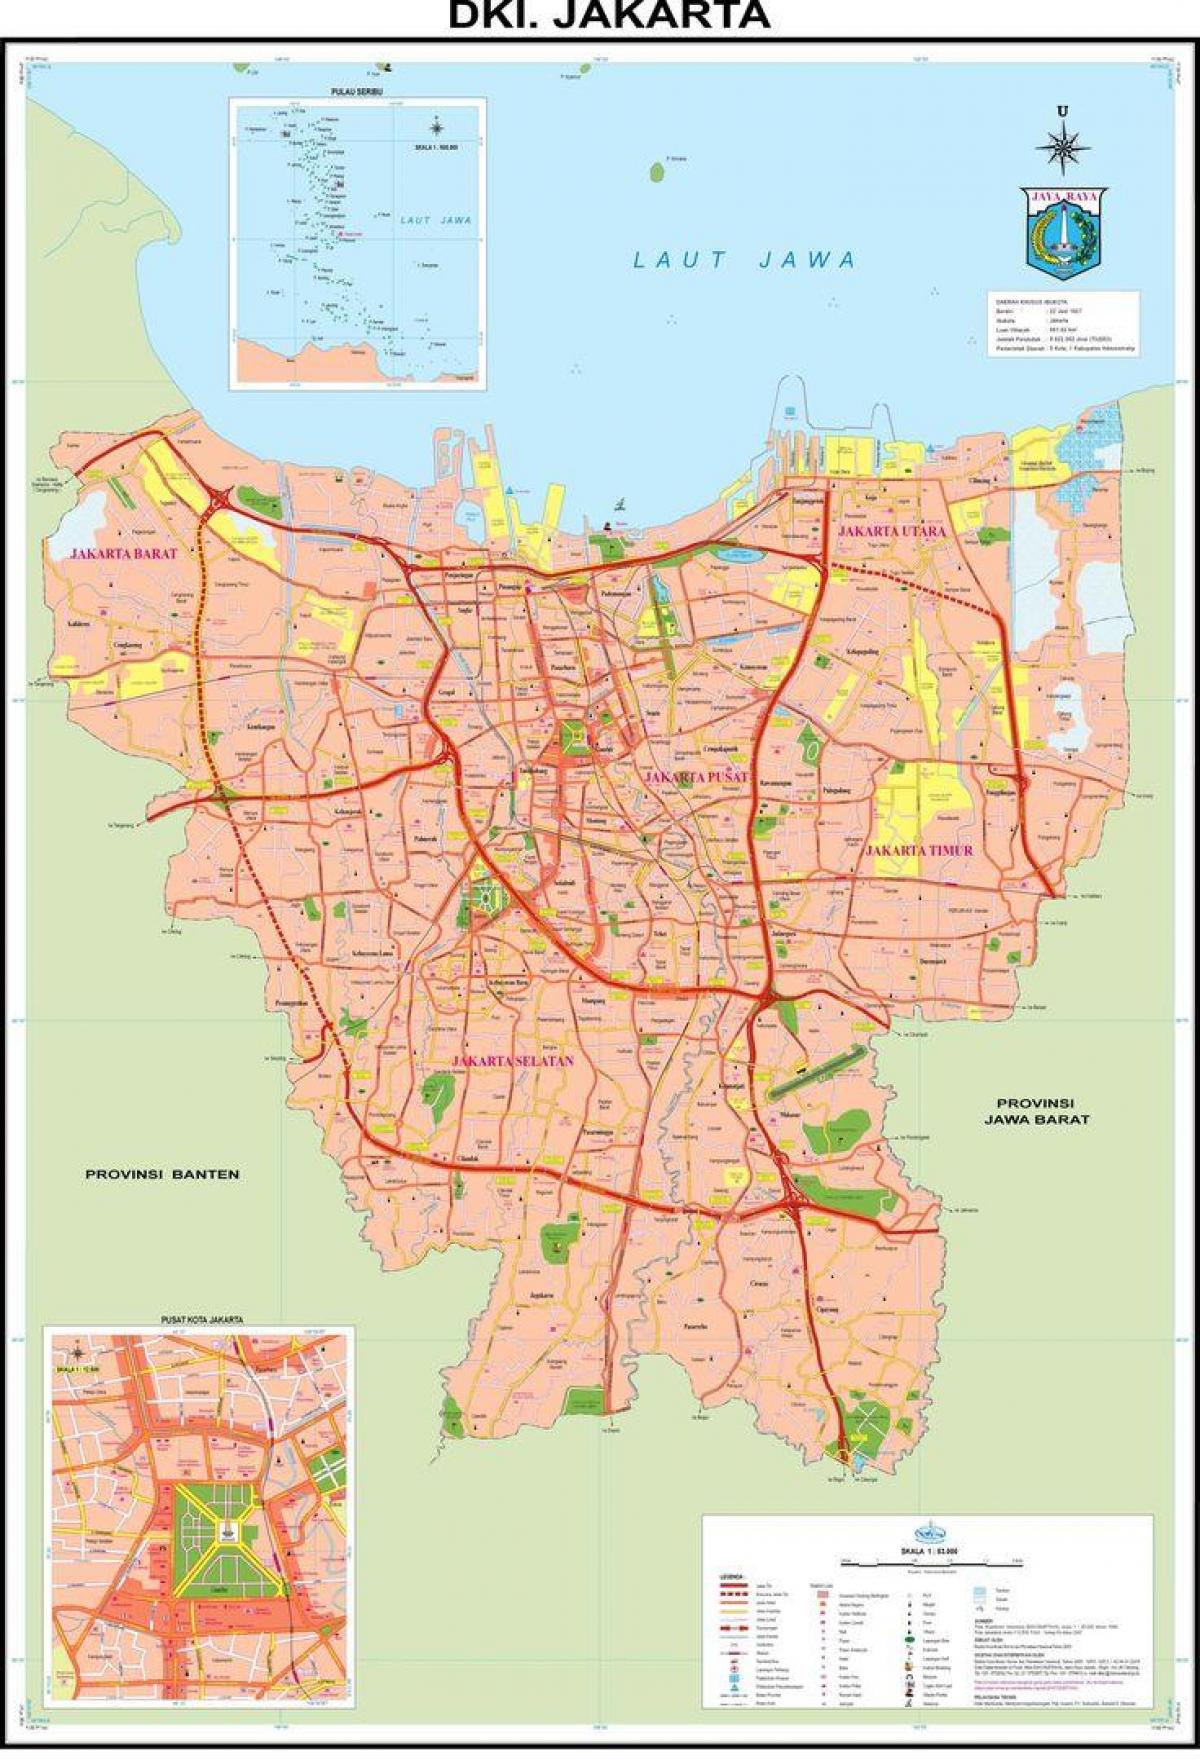 bản đồ của Jakarta old town